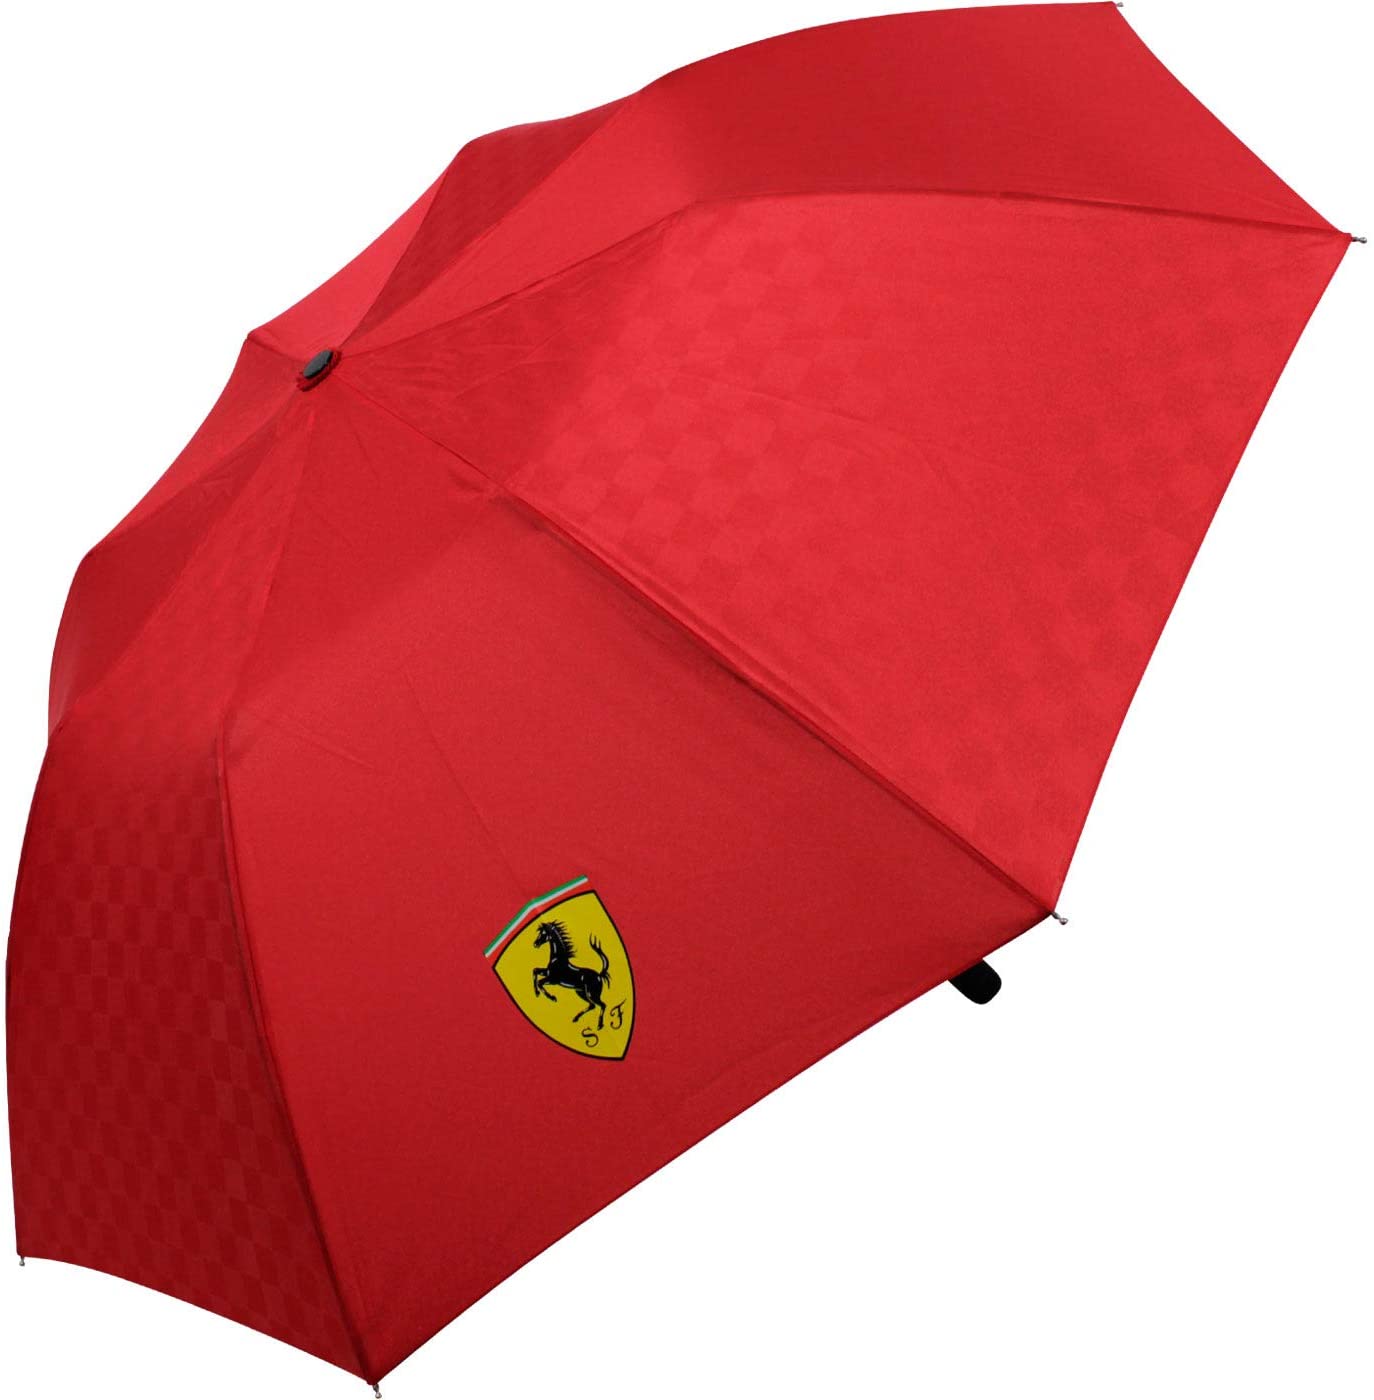 Scuderia Ferrari Compact Taschenschirm Automatik Regenschirm Schirm